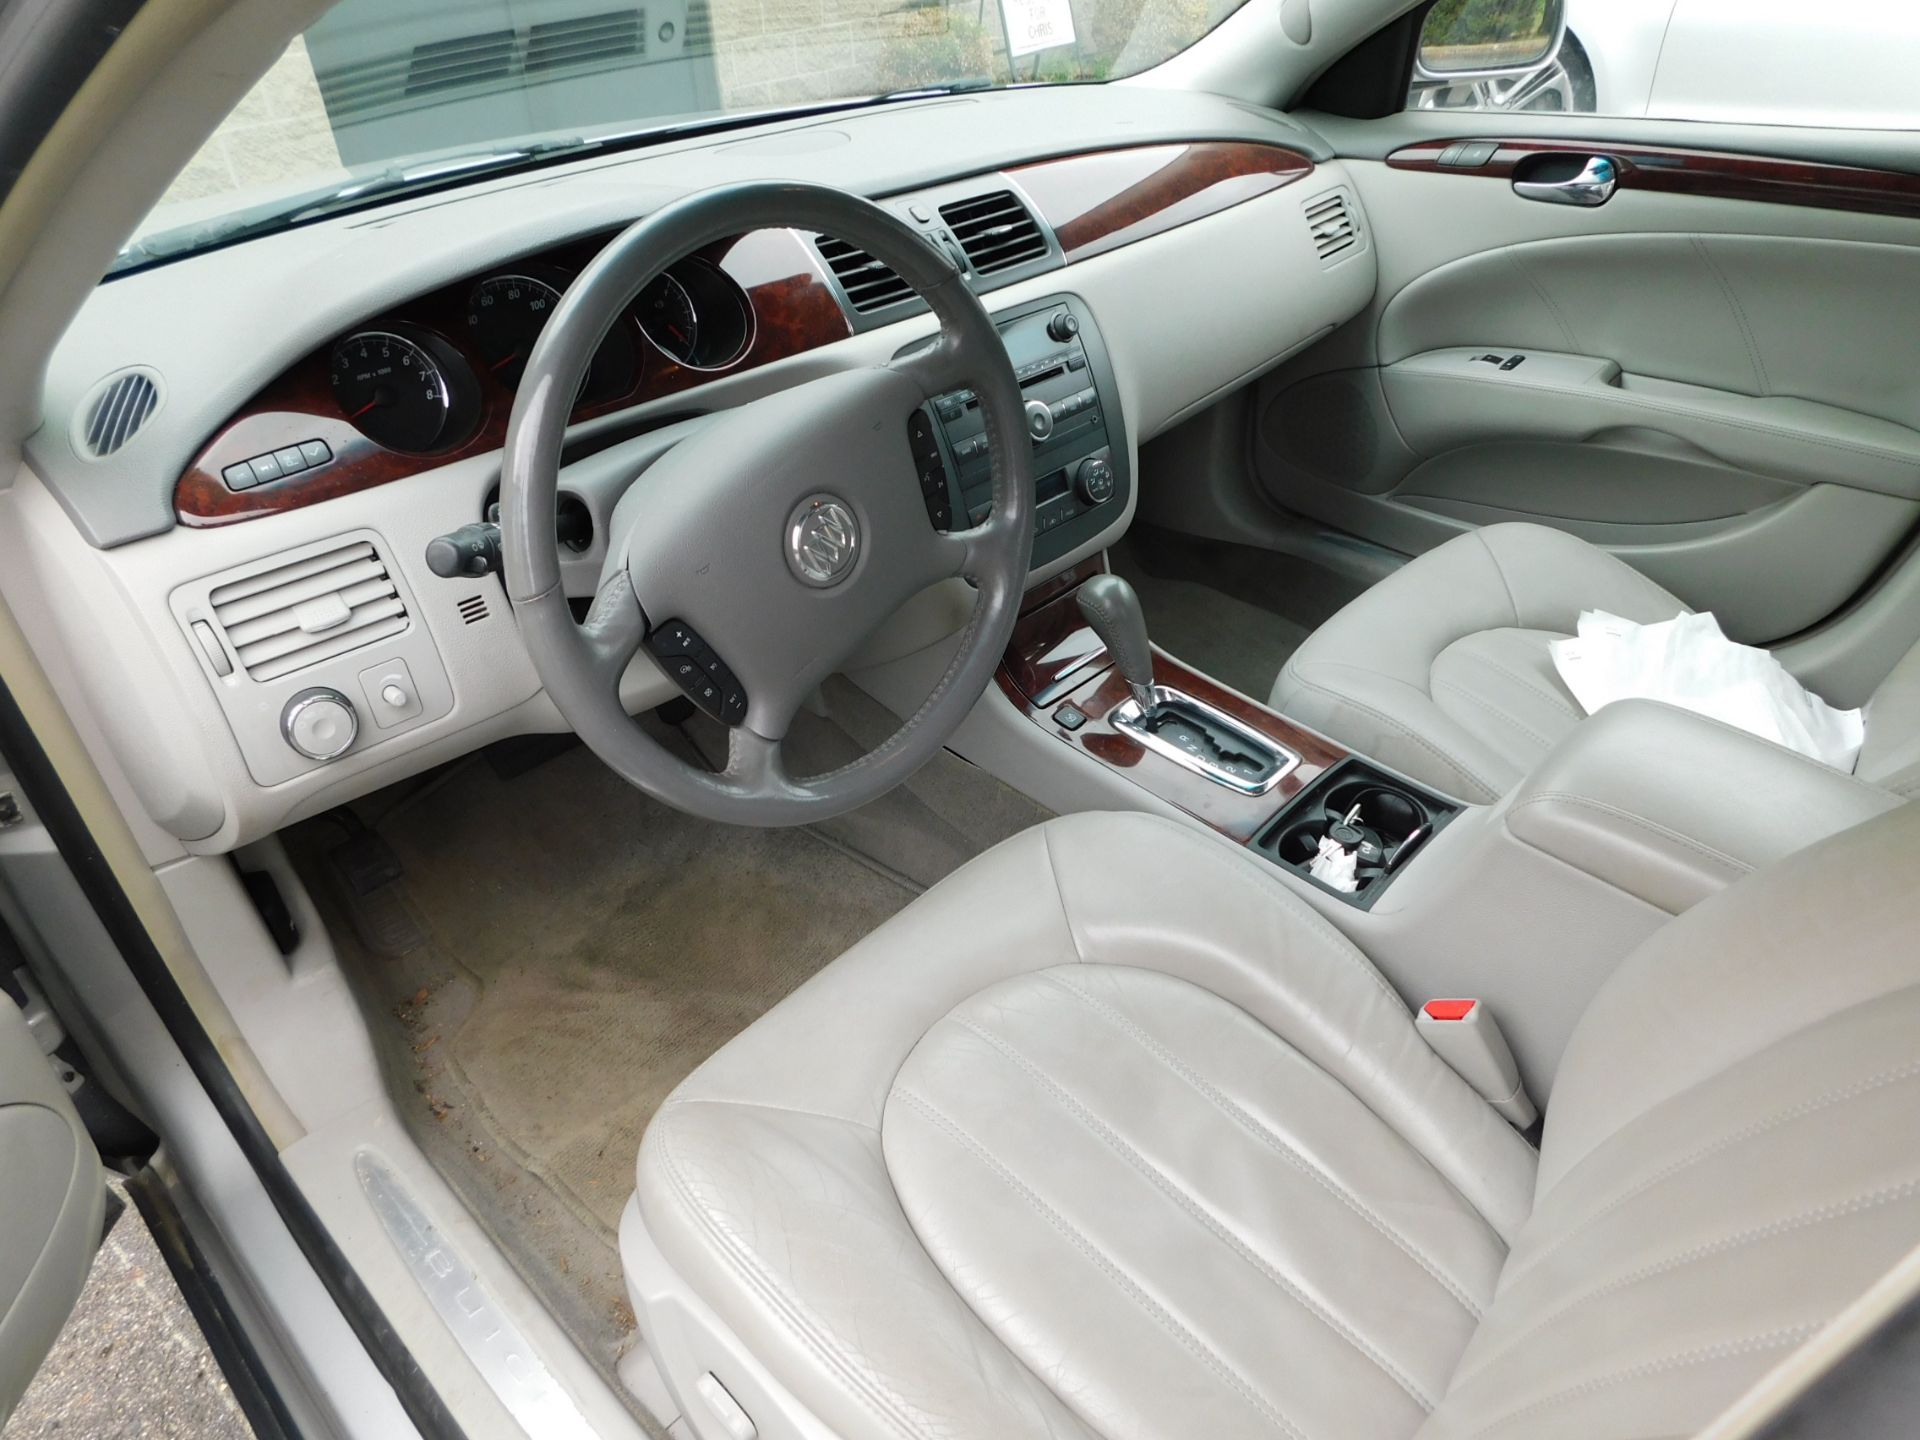 2007 Buick Lucerne CXL 4-Door Sedan, VIN 1G4HD57287U226782, Leather, Heated Seats, Automatic, PW, - Image 16 of 22